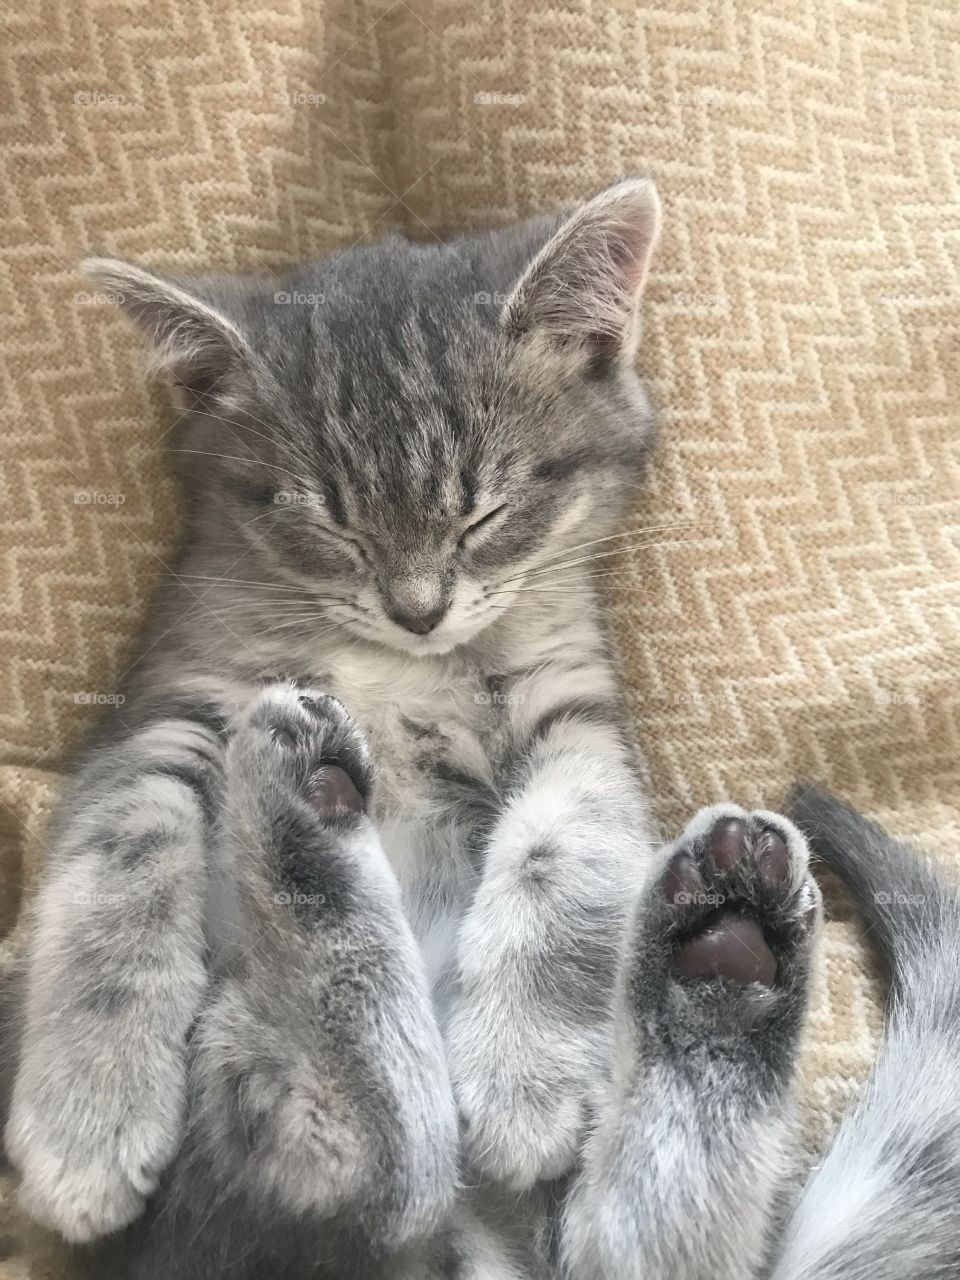 Cute grey and white kitten sleeping like a baby